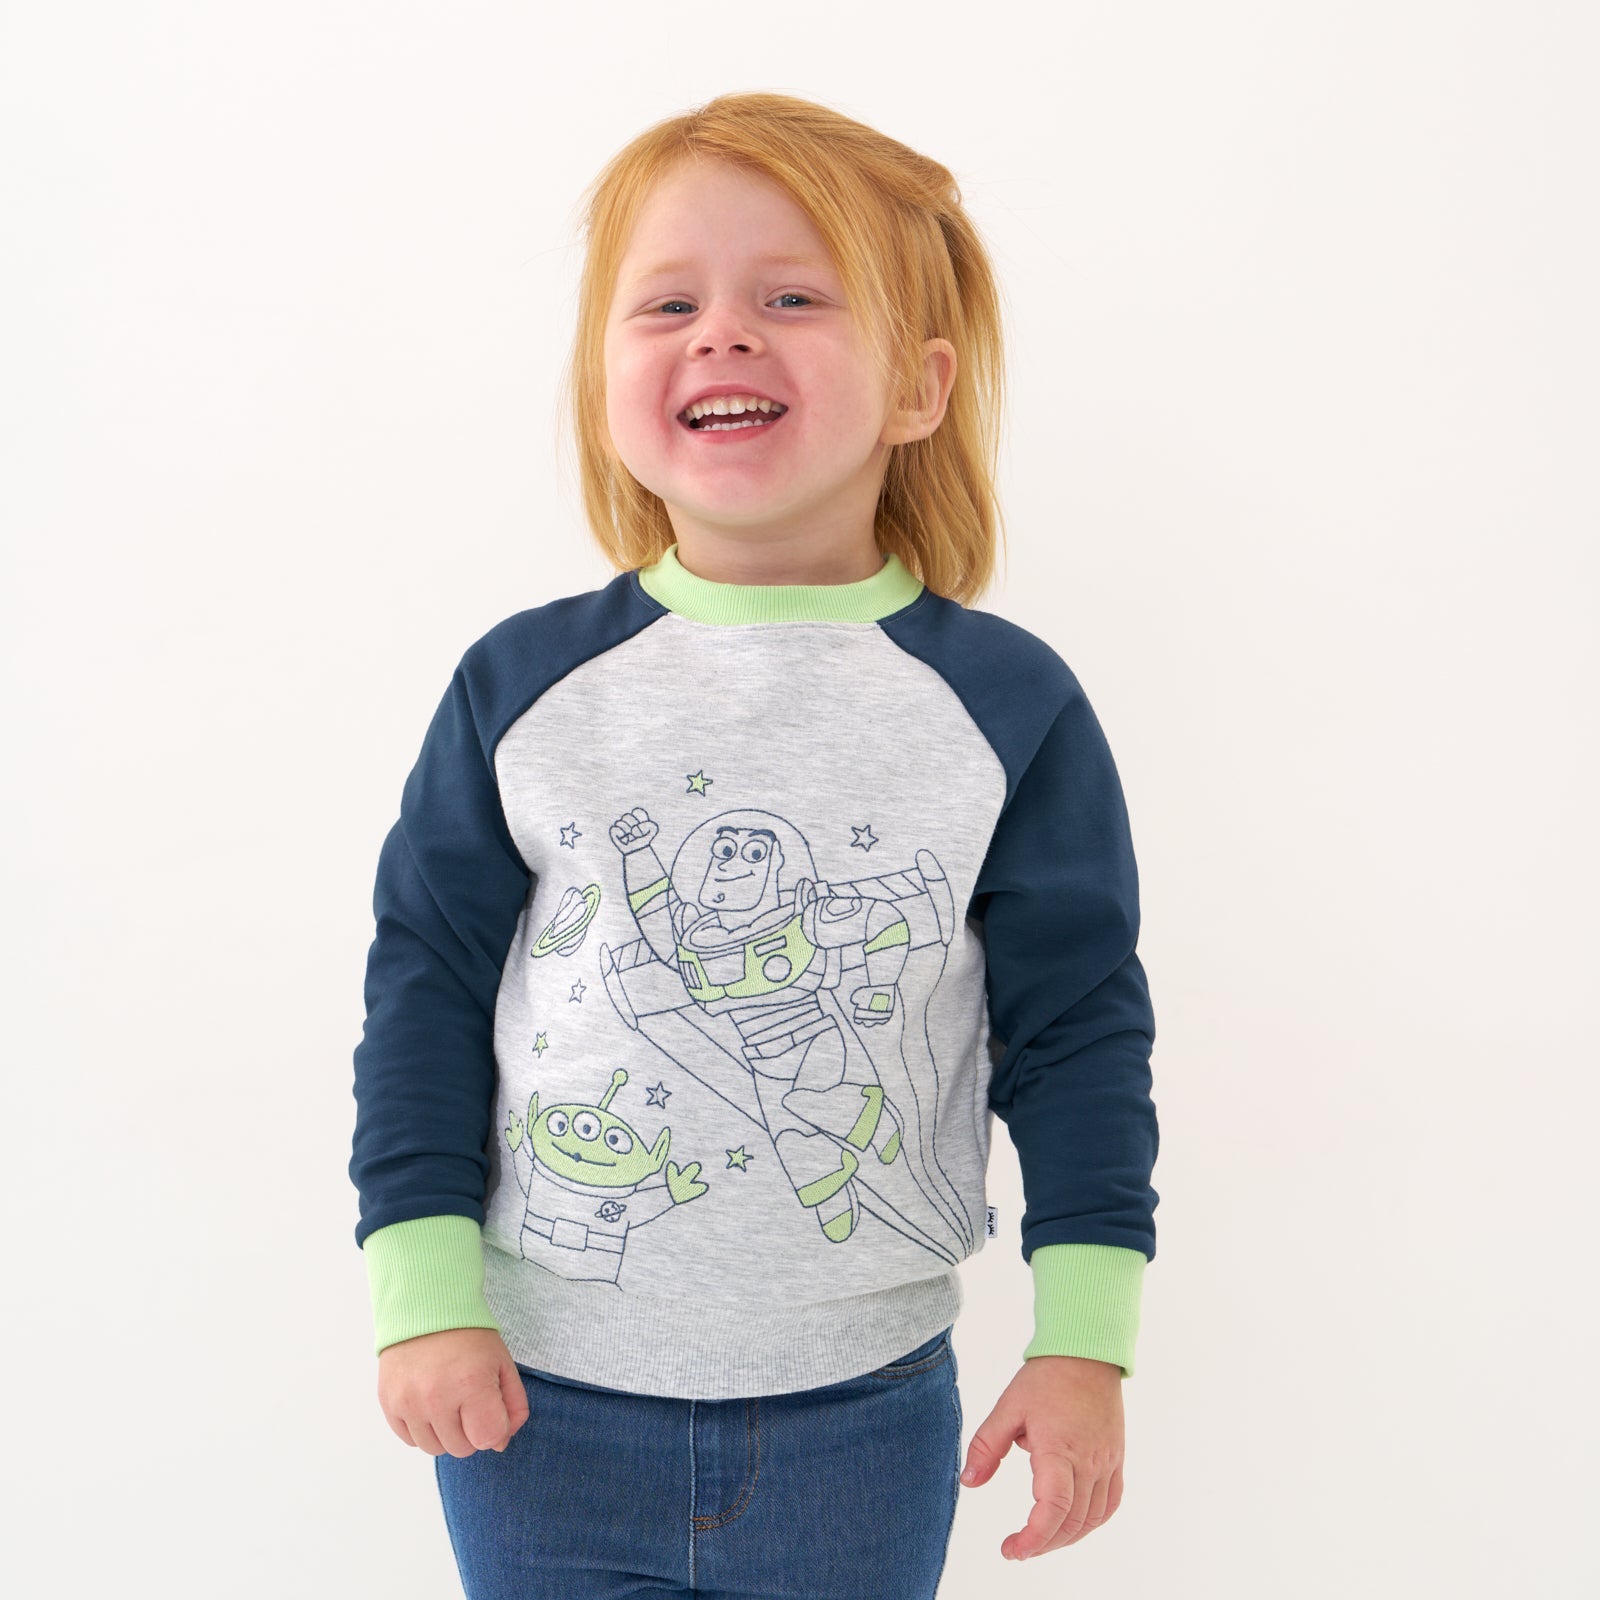 Alternate close up image of a child wearing a Disney Pixar Buzz Lightyear crewneck sweatshirt